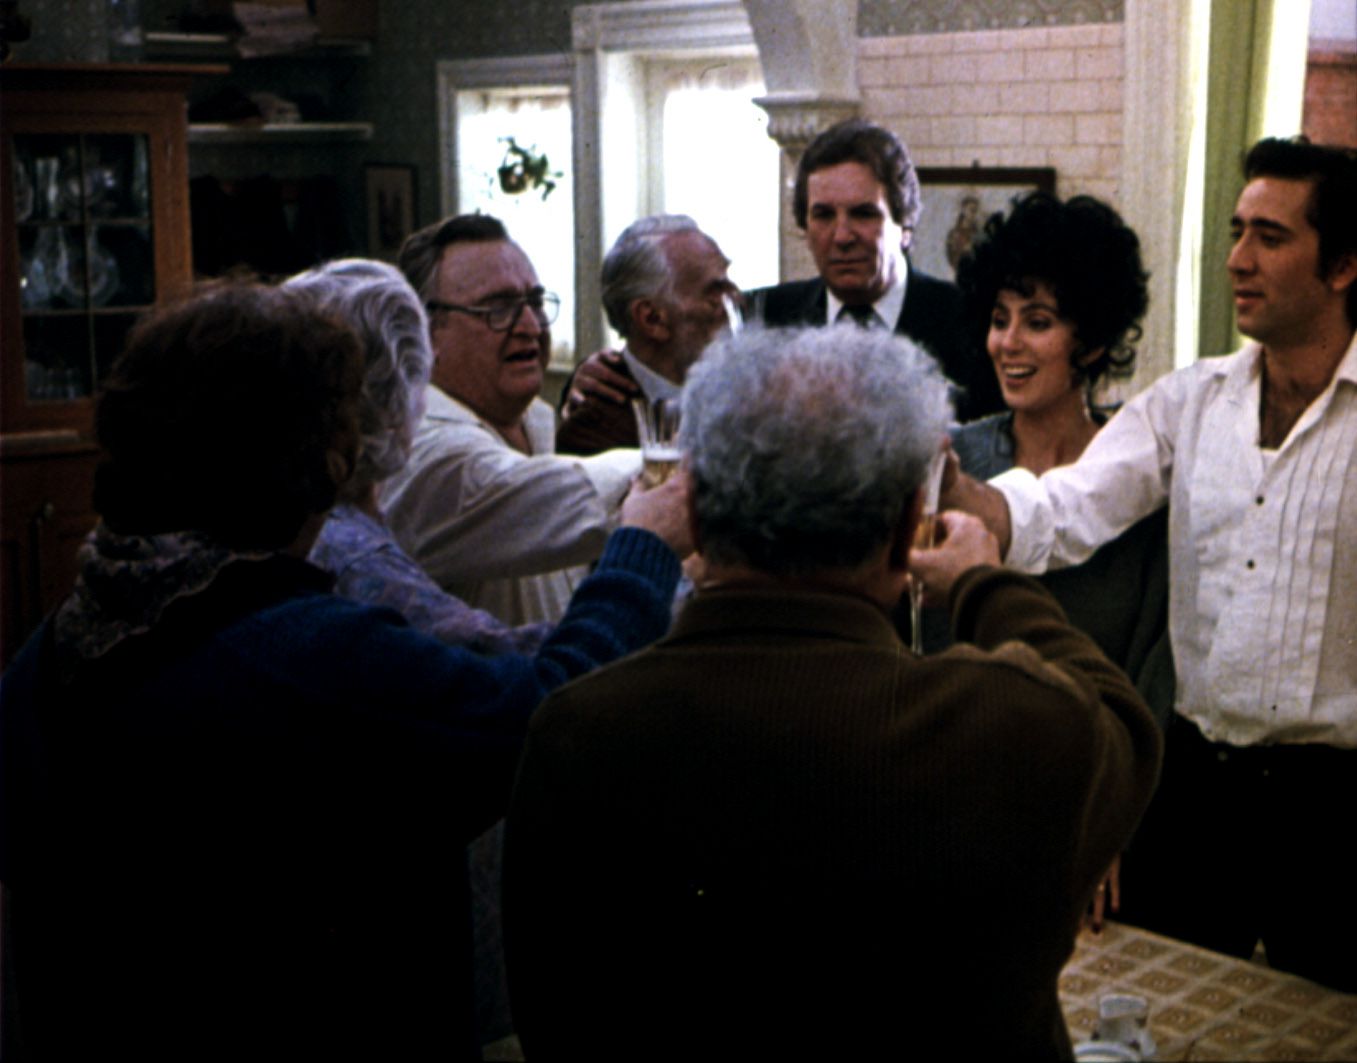 MOONSTRUCK, Vincent Gardenia, Danny Aiello, Cher, Nicolas Cage, 1987